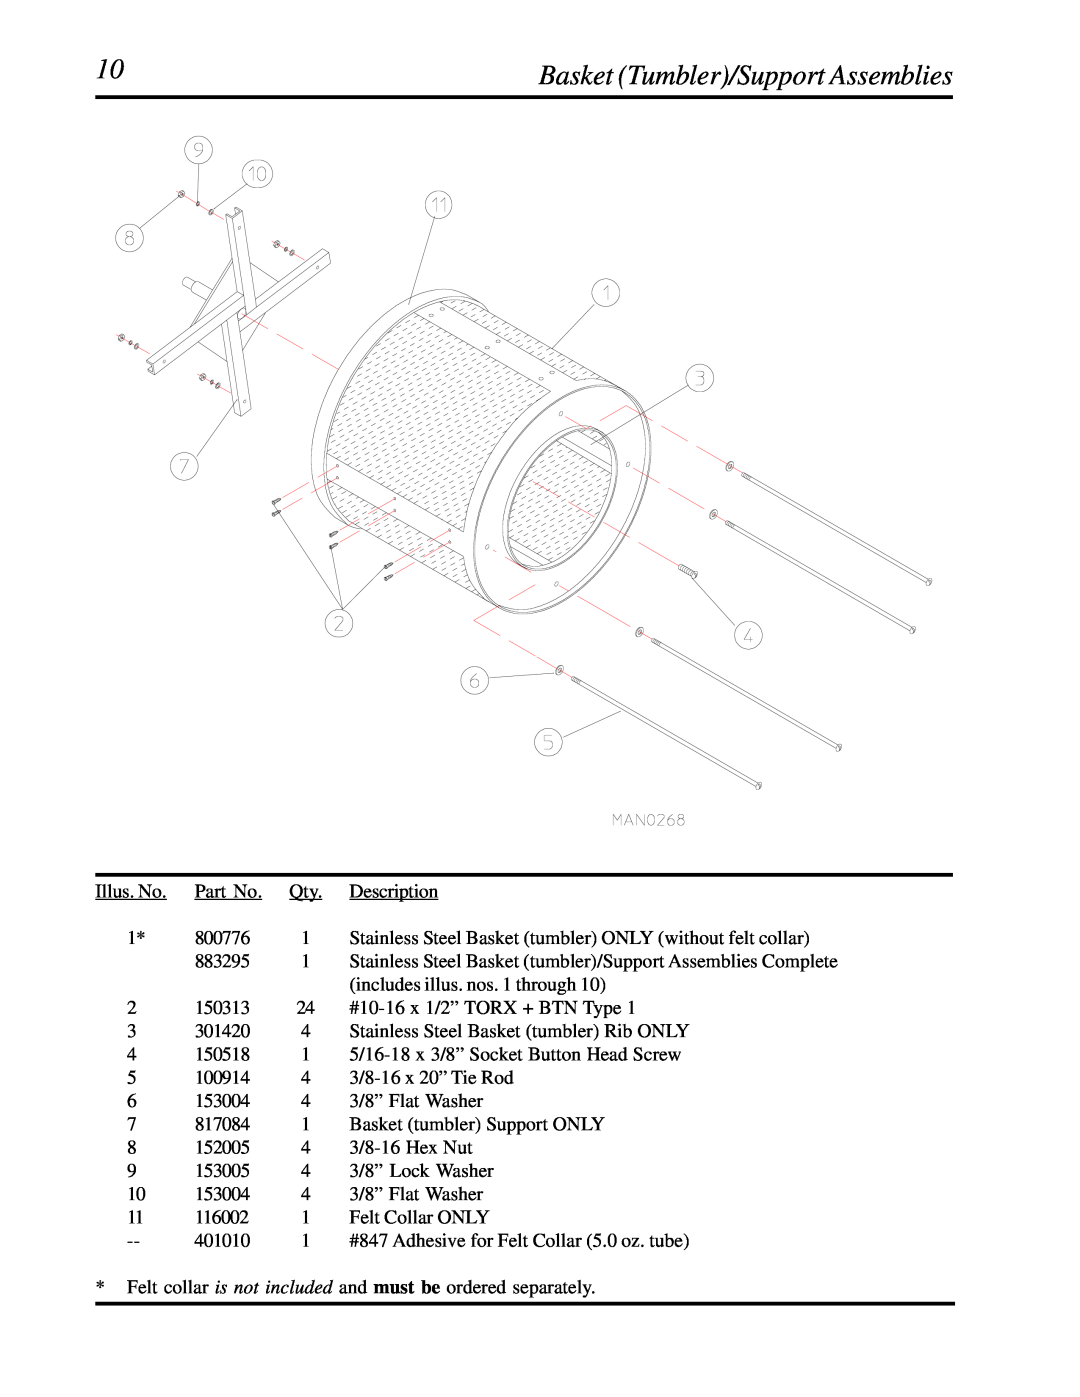 American Dryer Corp D30 manual Basket Tumbler/Support Assemblies 